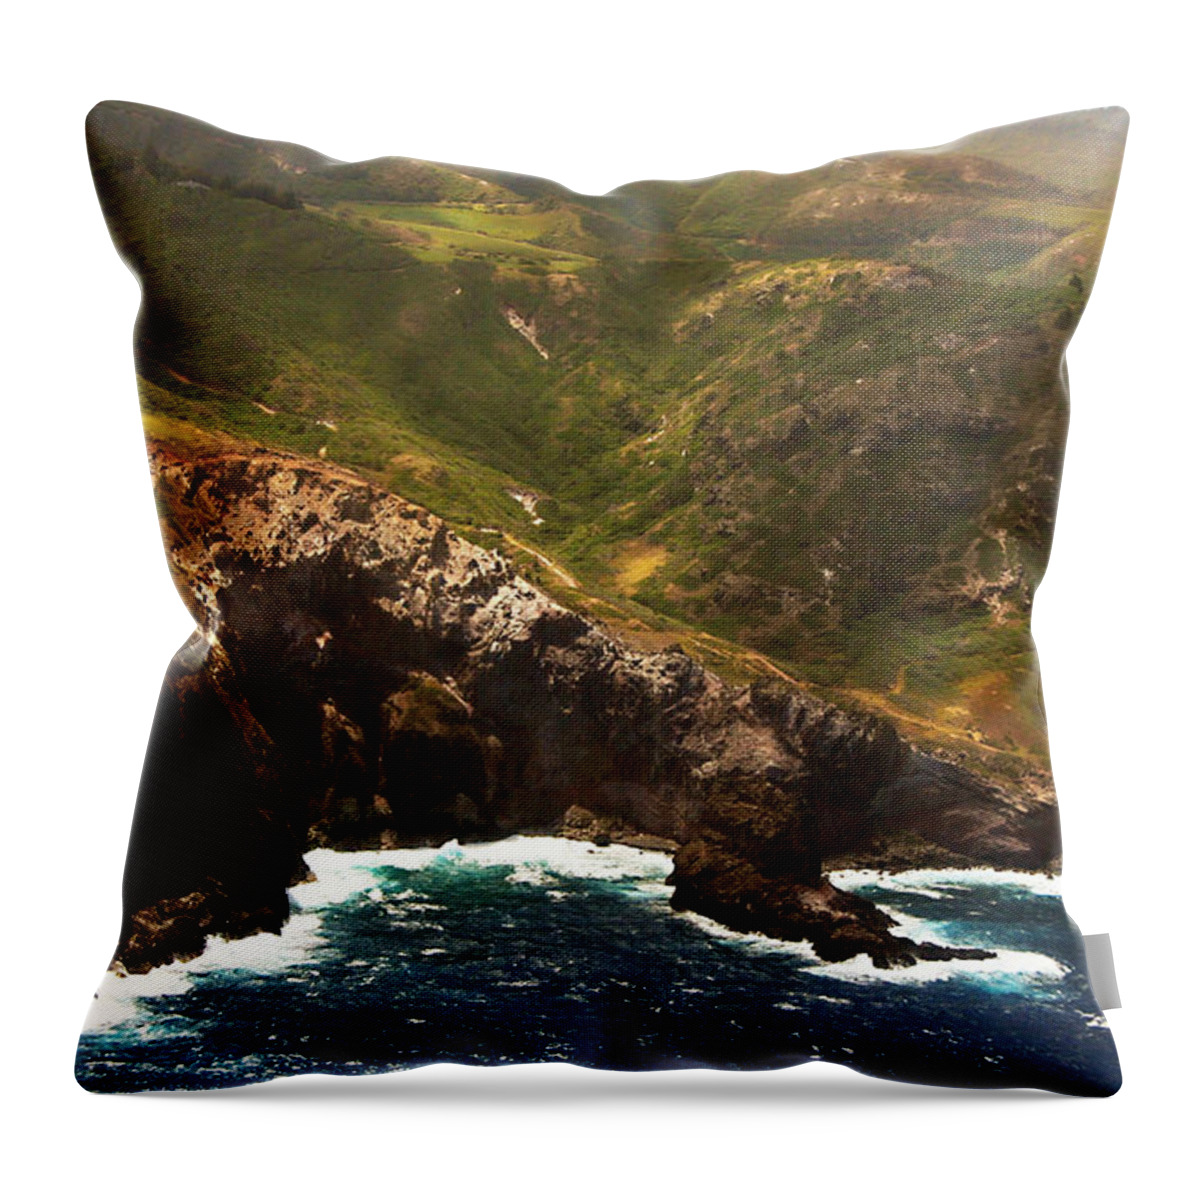 West Coast Of Molokai Throw Pillow featuring the photograph West Coast of Molokai by Ellen Henneke